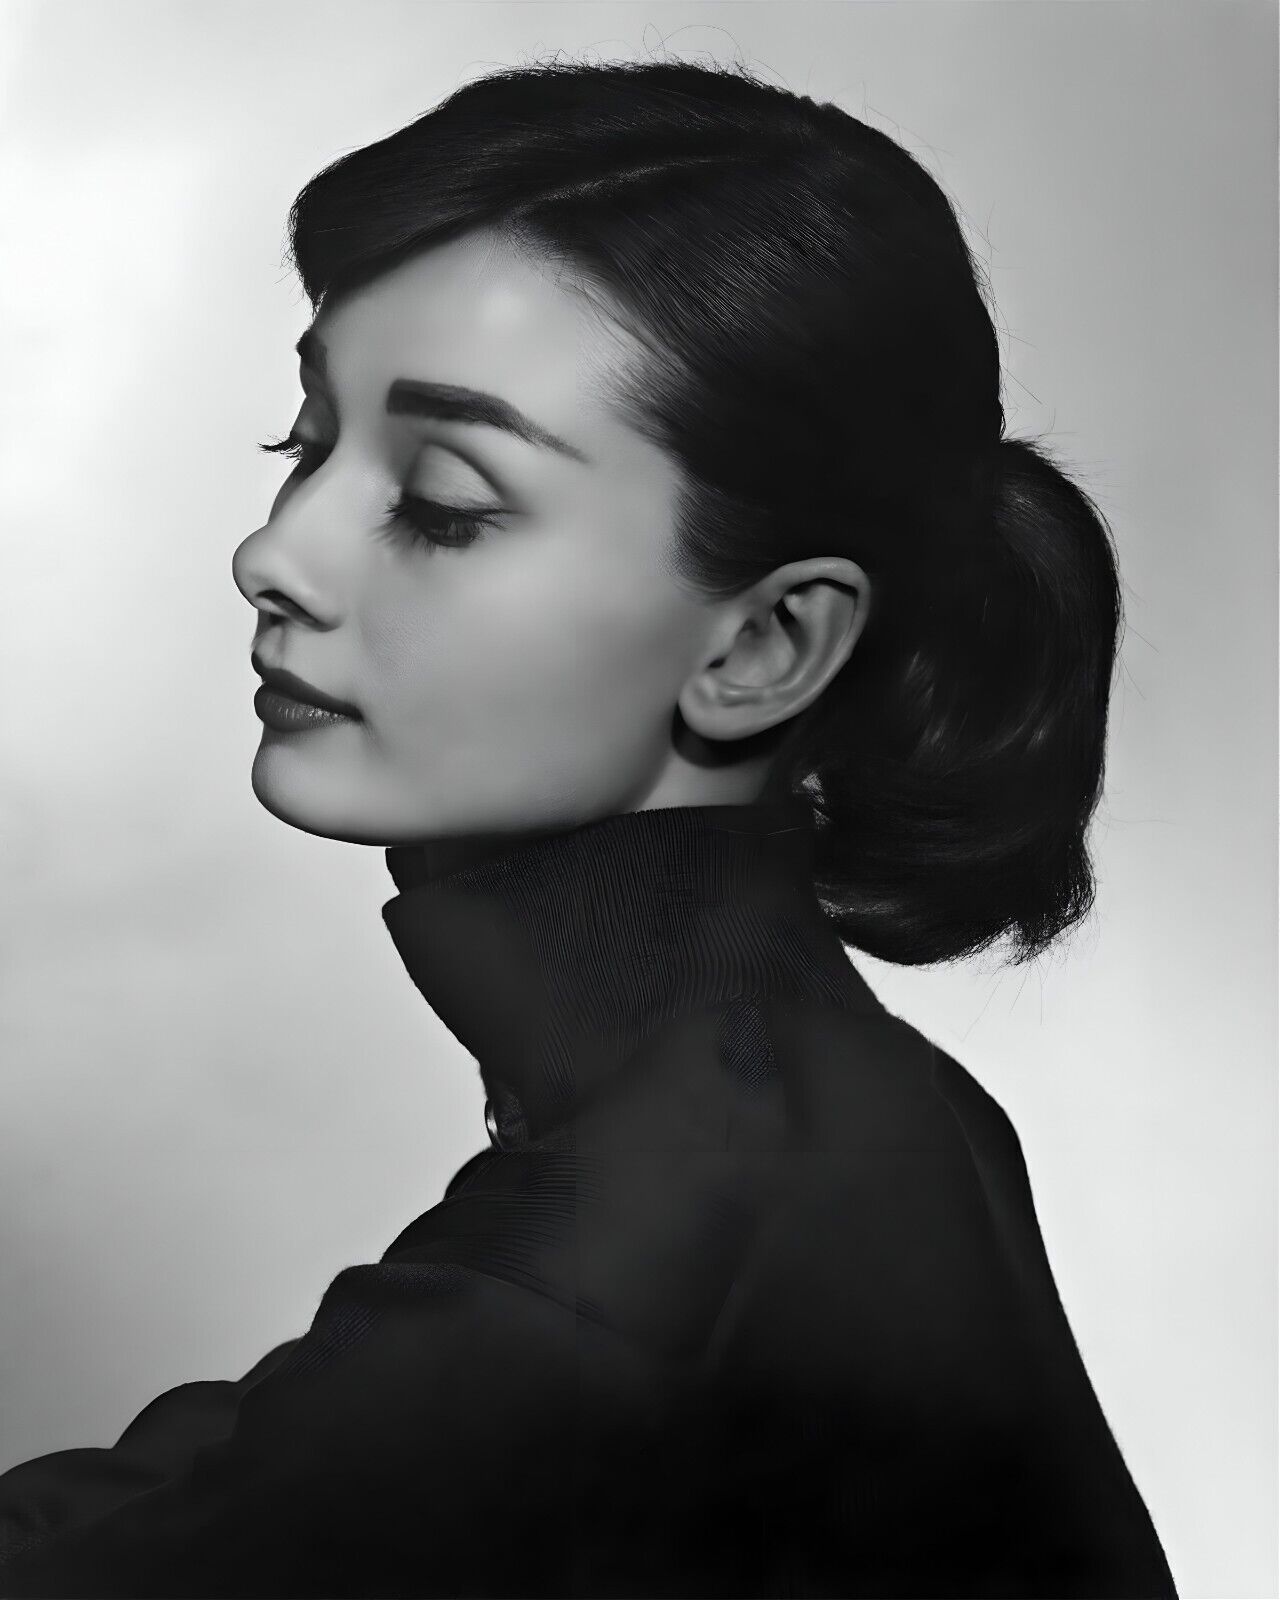 Audrey Hepburn 8x10 Picture Celebrity Print Photograph Reprint Hollywood Actress